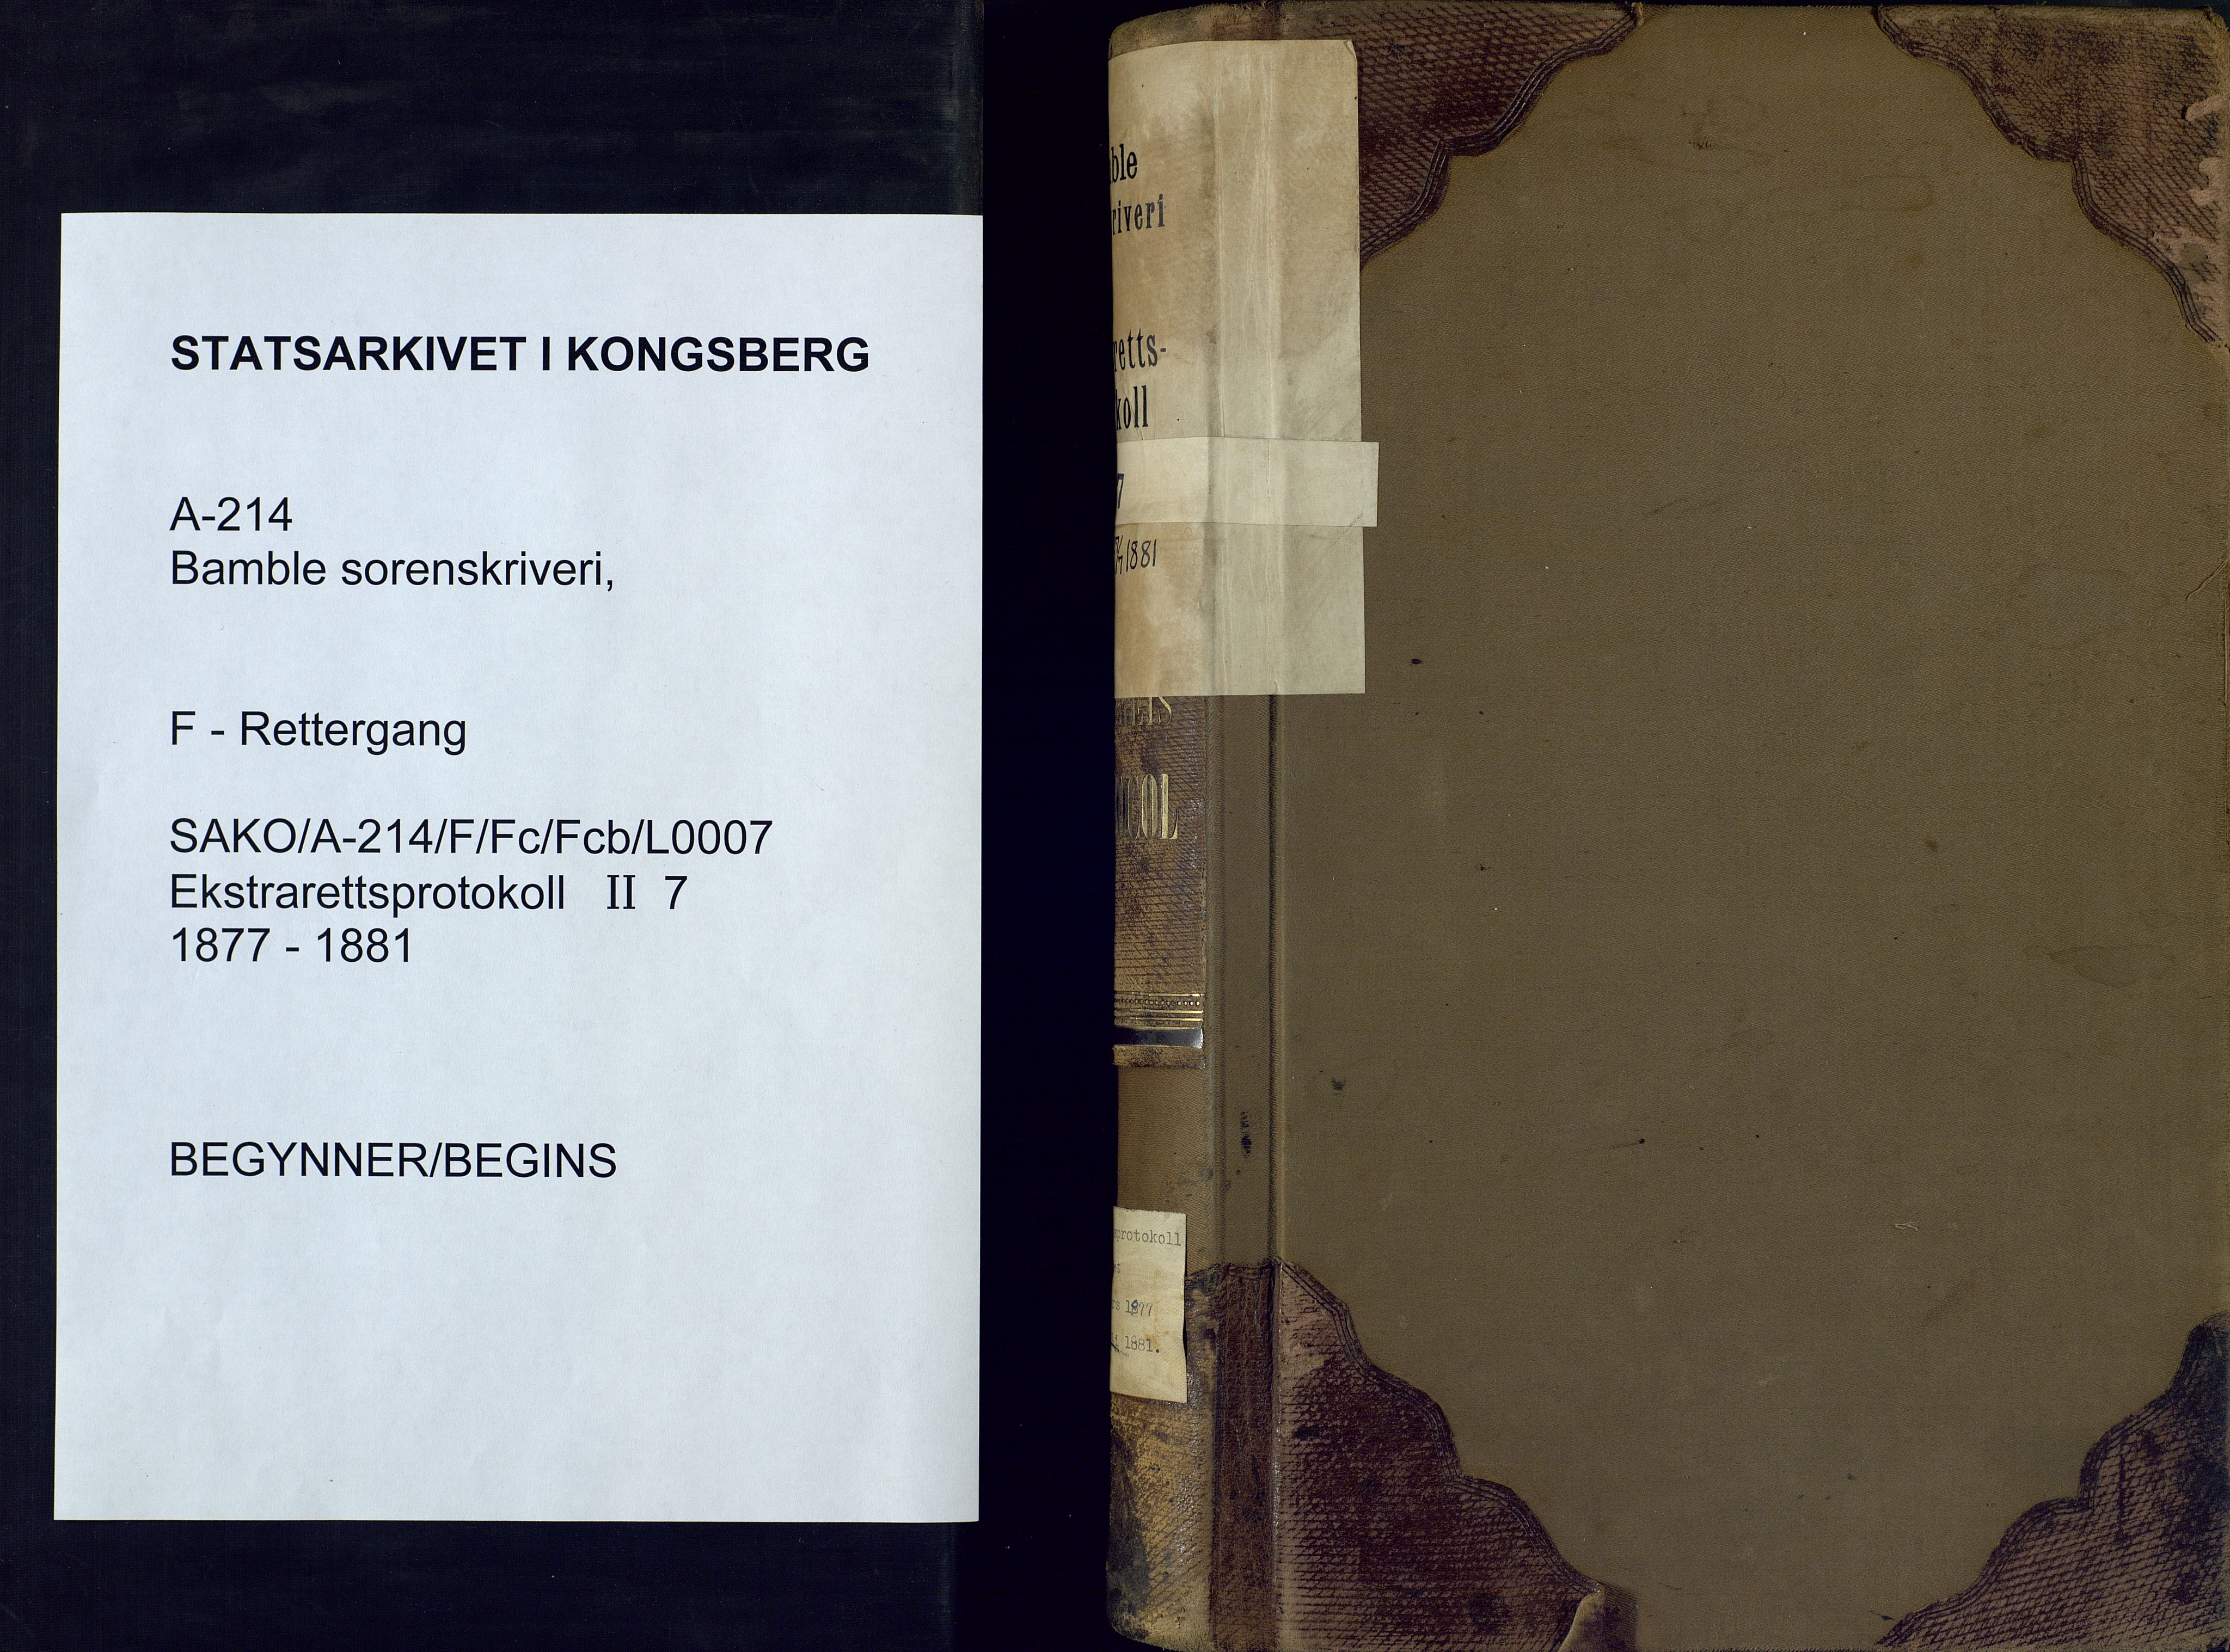 Bamble sorenskriveri, SAKO/A-214/F/Fc/Fcb/L0007: Ekstrarettprotokoll, 1877-1881